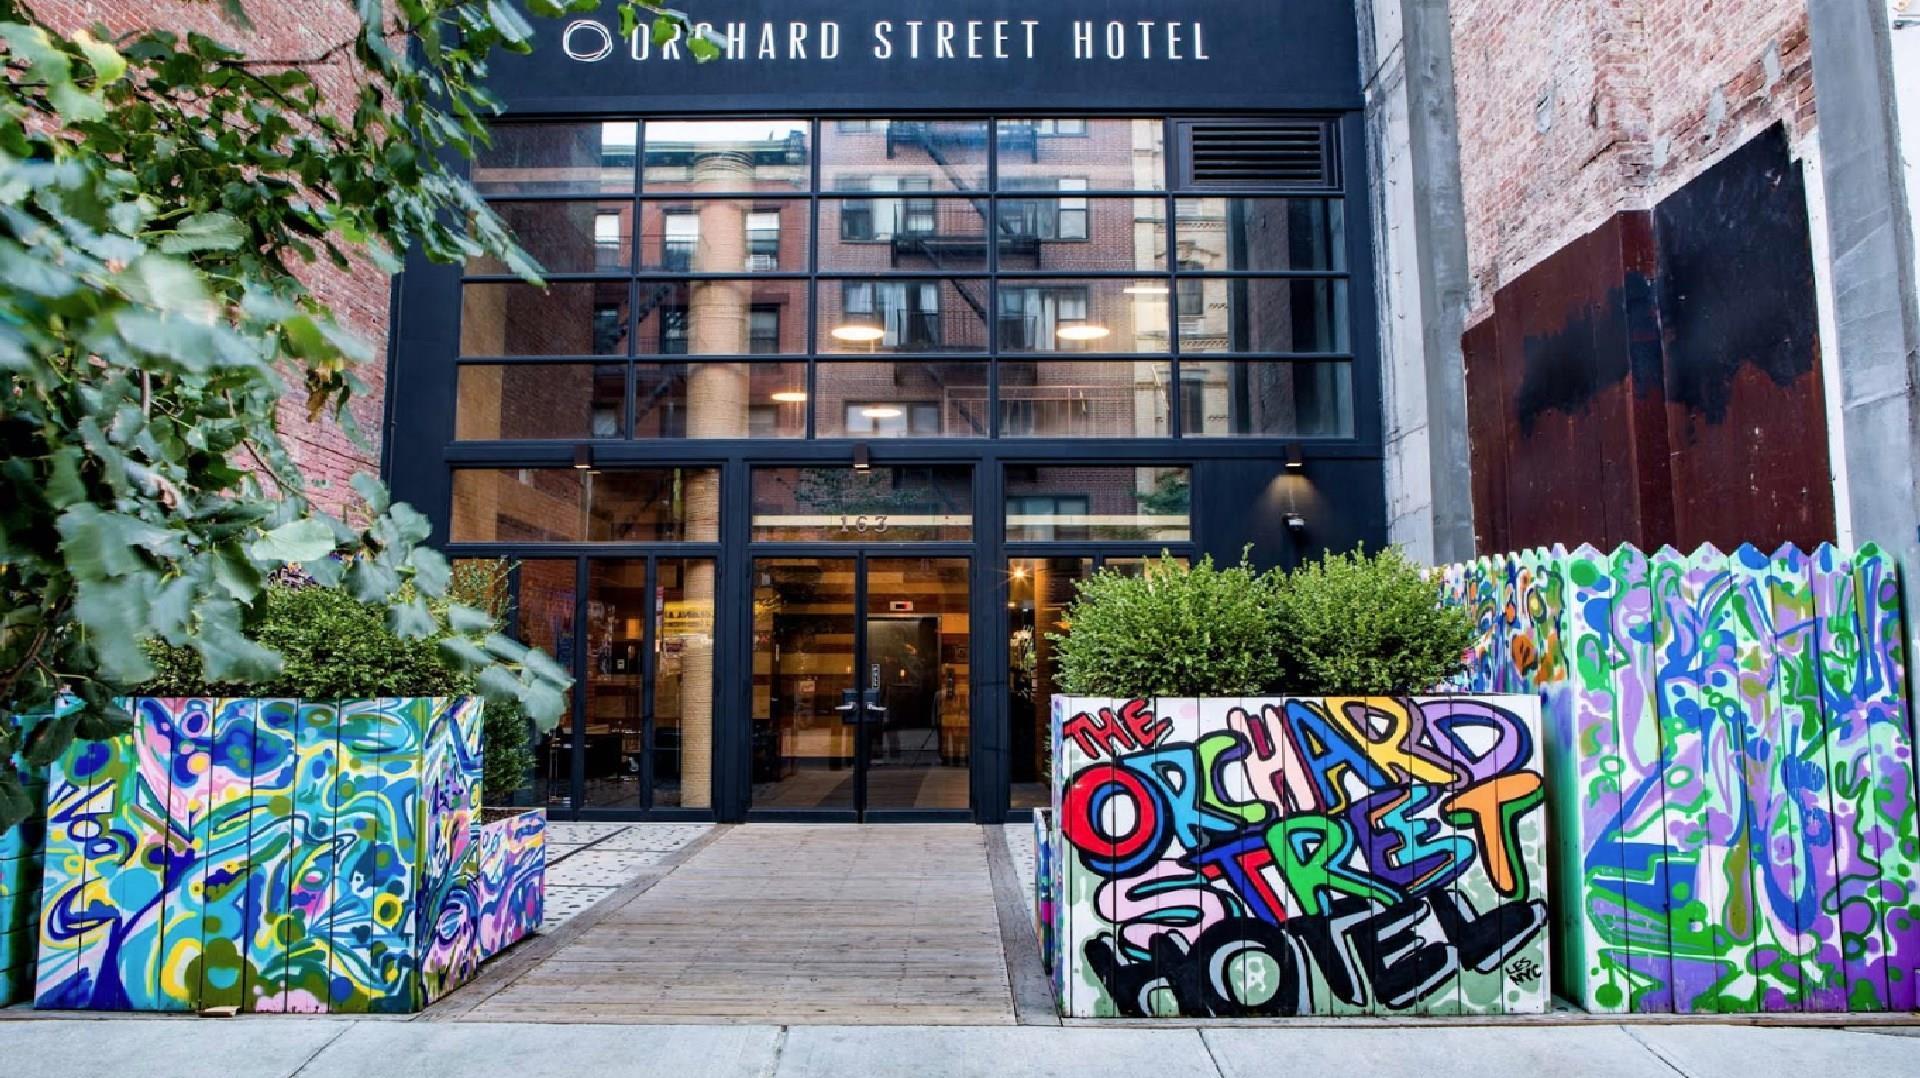 Orchard Street Hotel in New York, NY